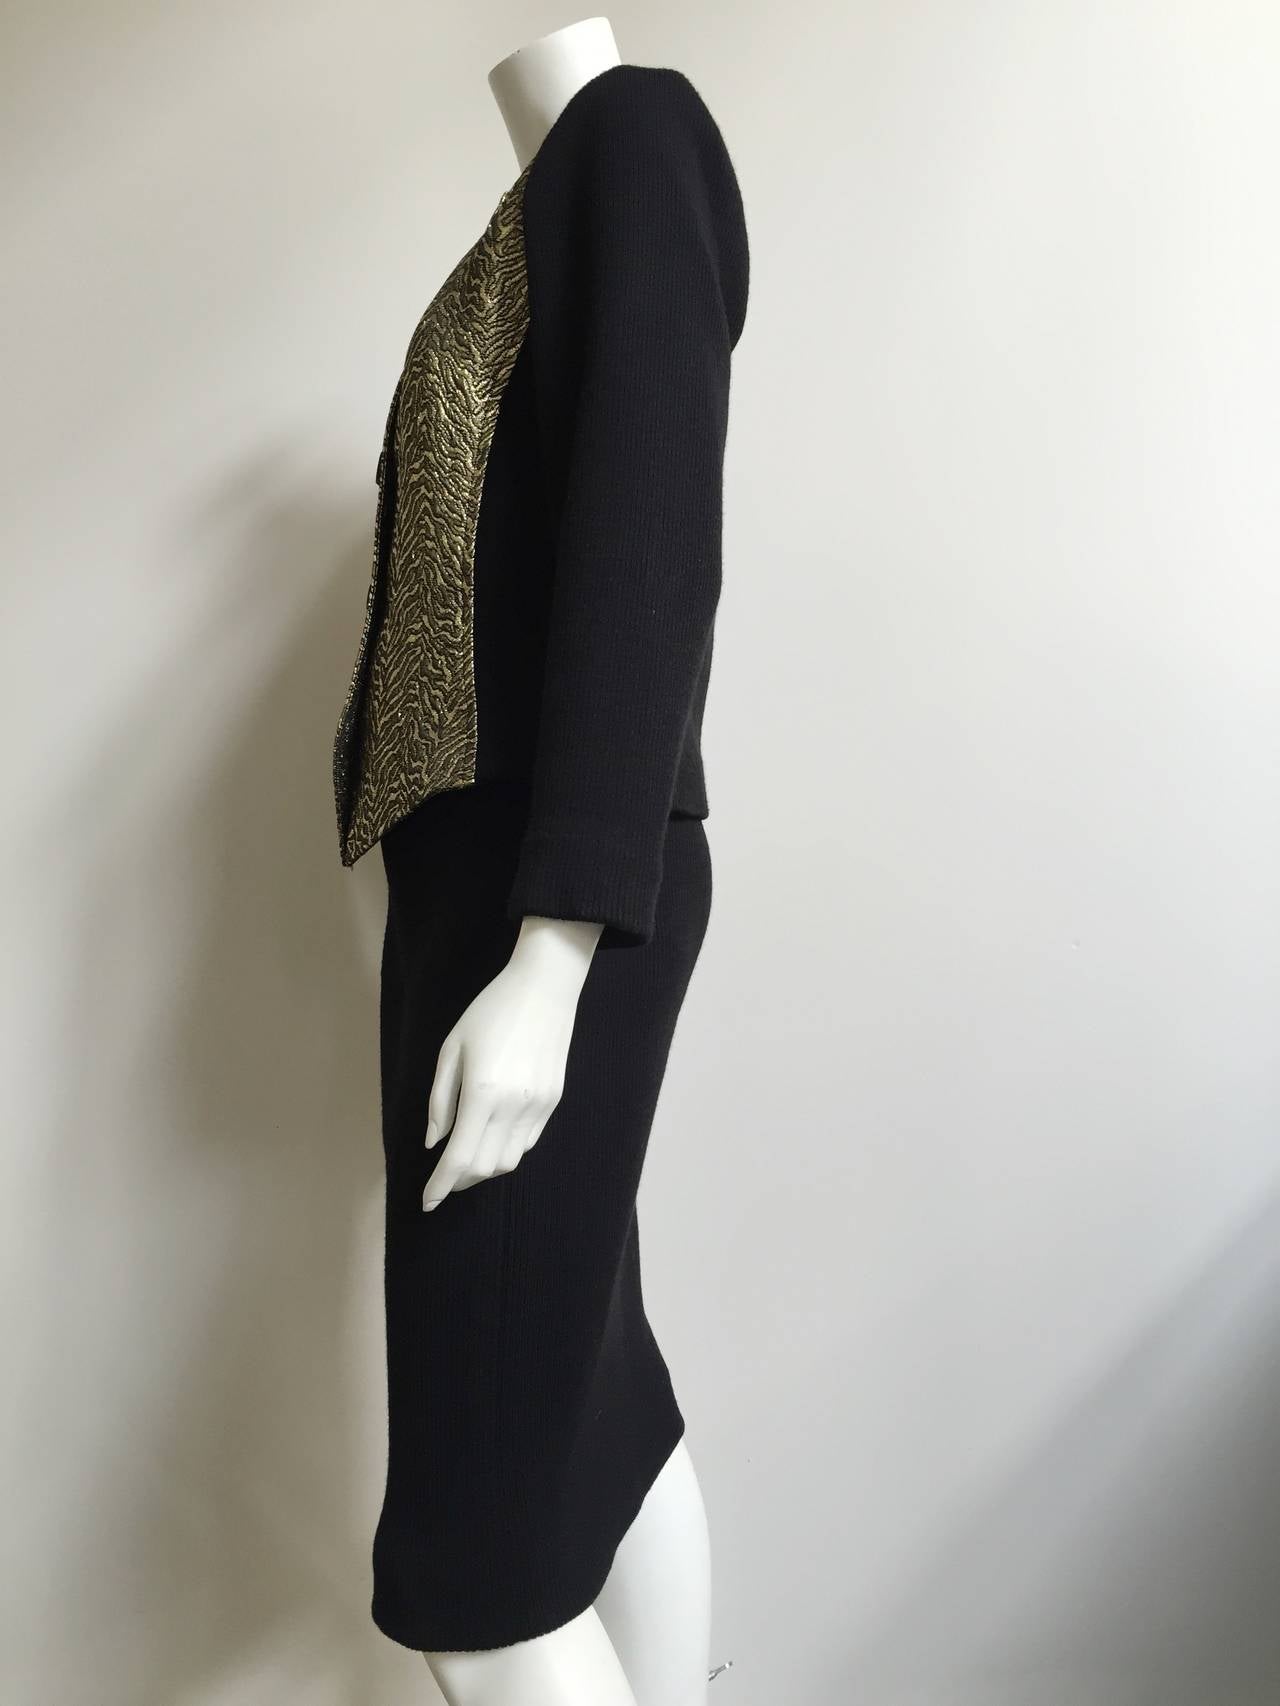 Saint Laurent Rive Gauche Gold Jacquard Knit Suit Size 6 / 8. In Excellent Condition For Sale In Atlanta, GA